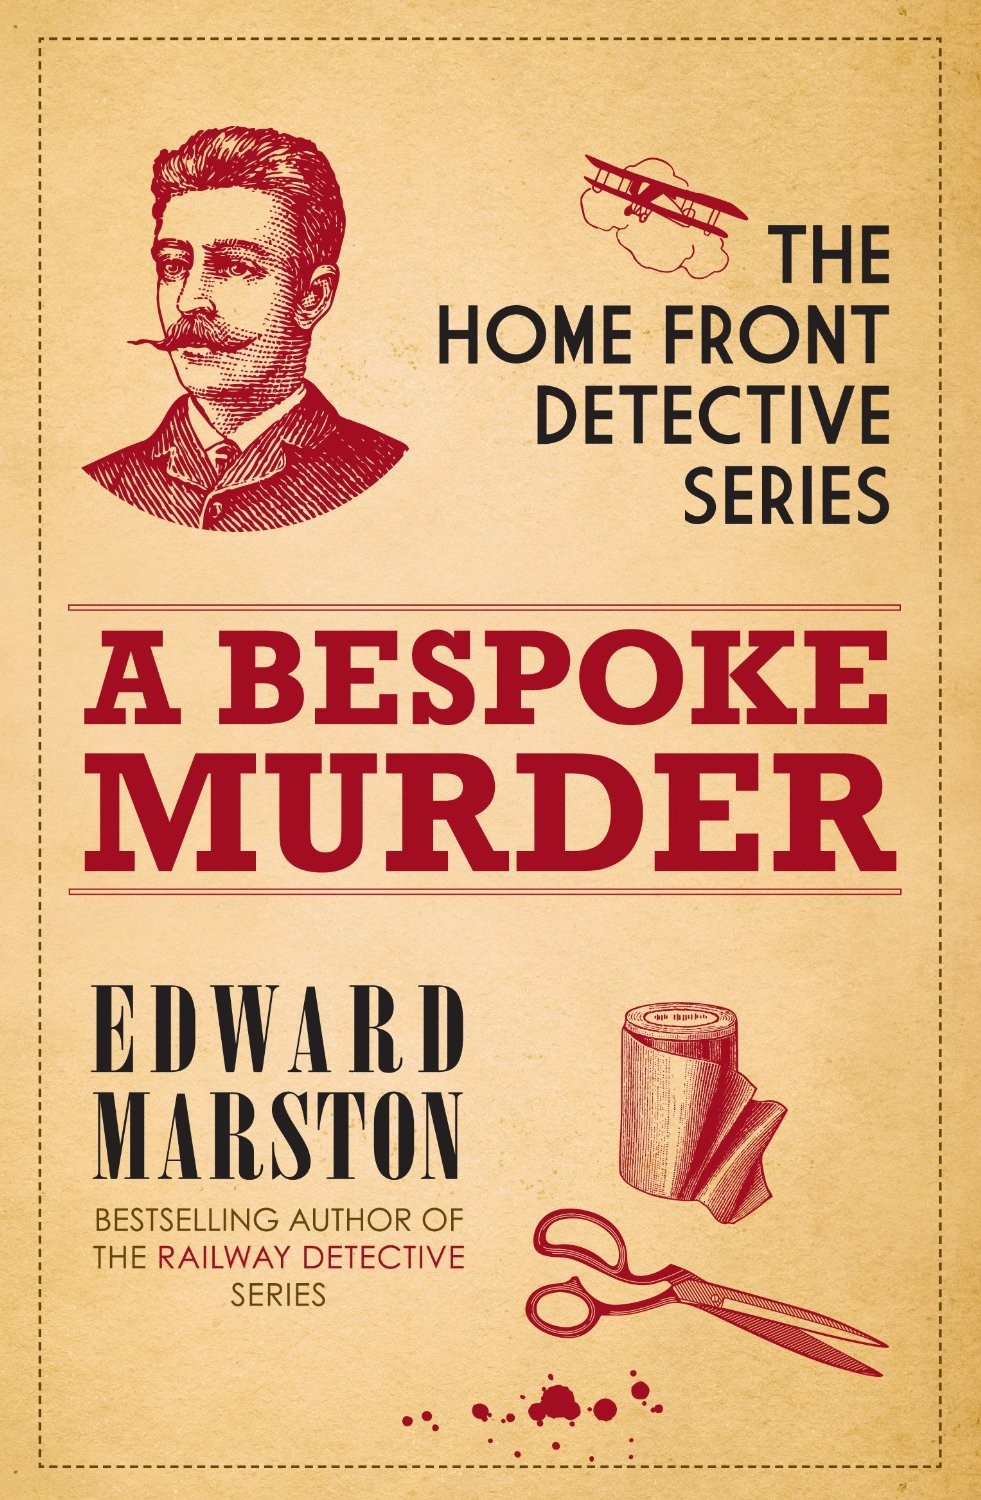 A Bespoke Murder by Edward Marston